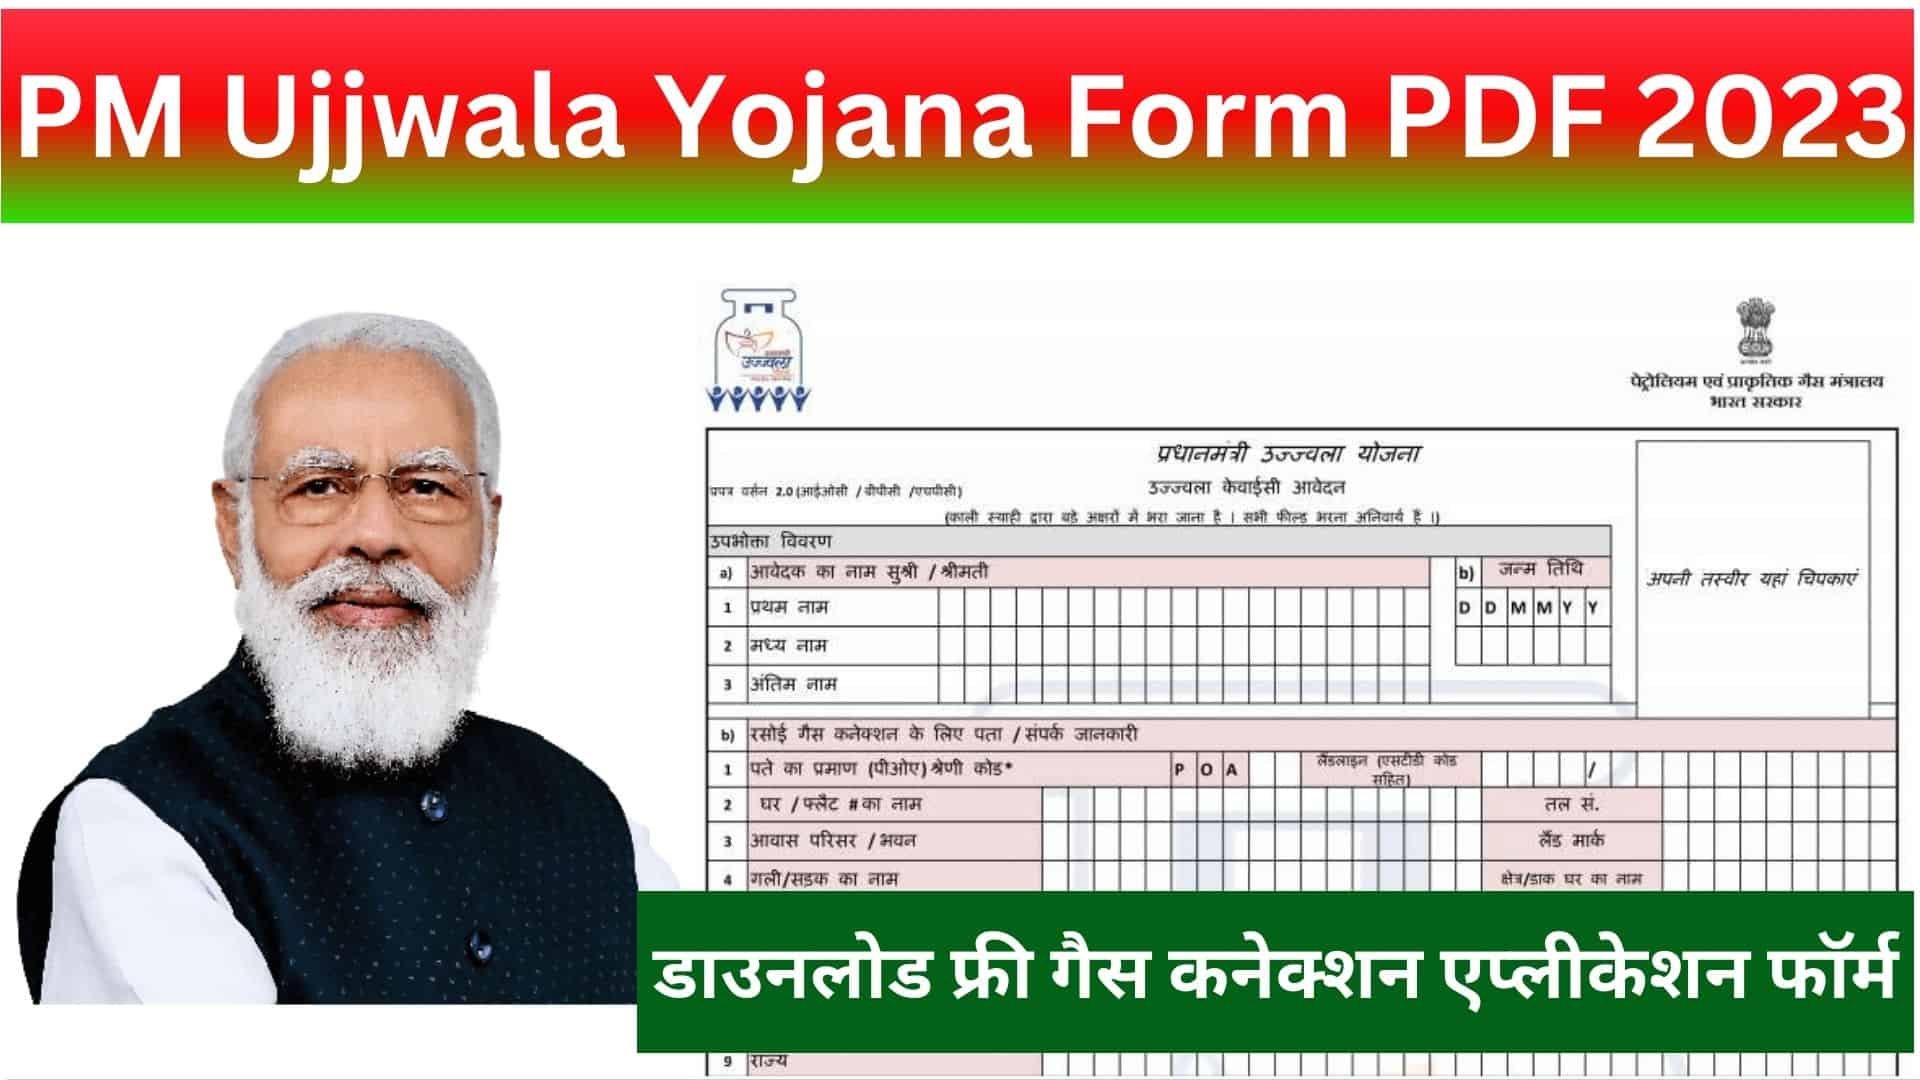 PM Ujjwala Yojana Form PDF 2023: डाउनलोड फ्री गैस कनेक्शन एप्लीकेशन फॉर्म